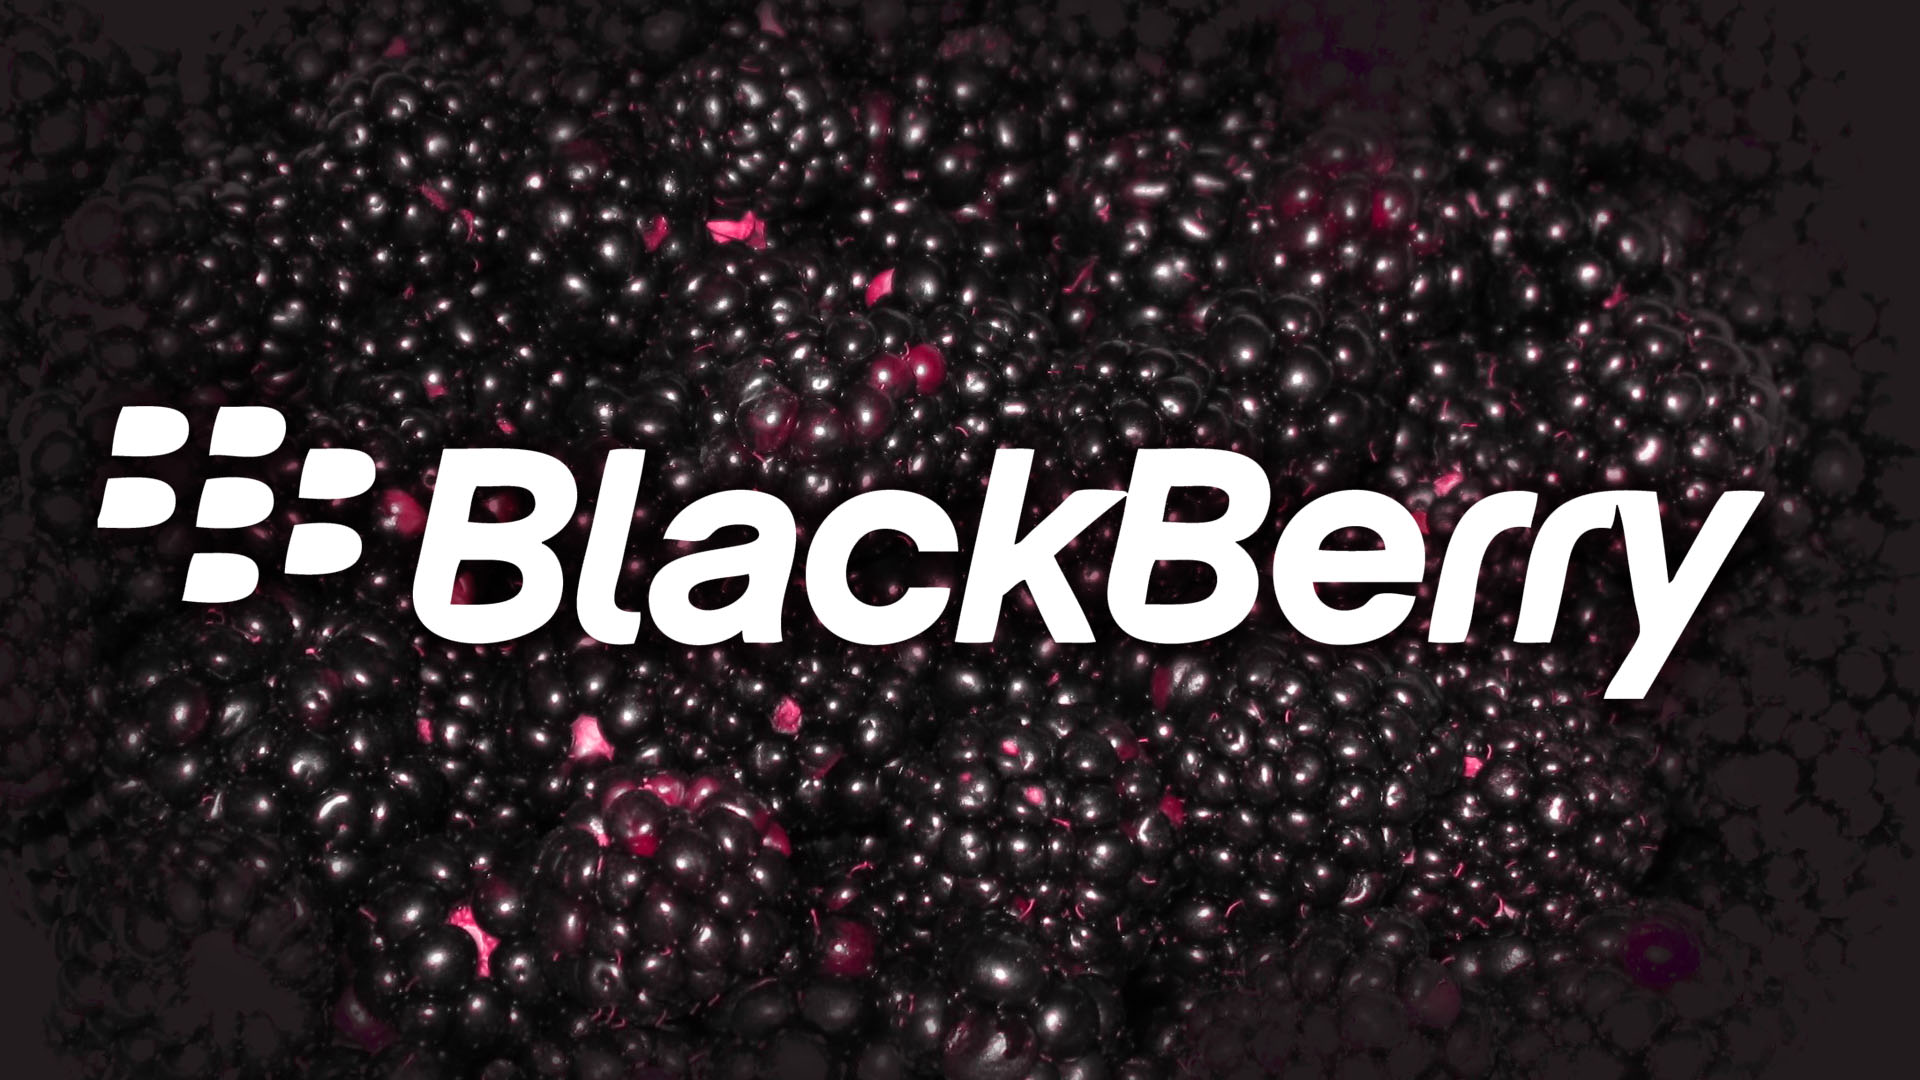 Blackberry HD Wallpaper Brands Ads